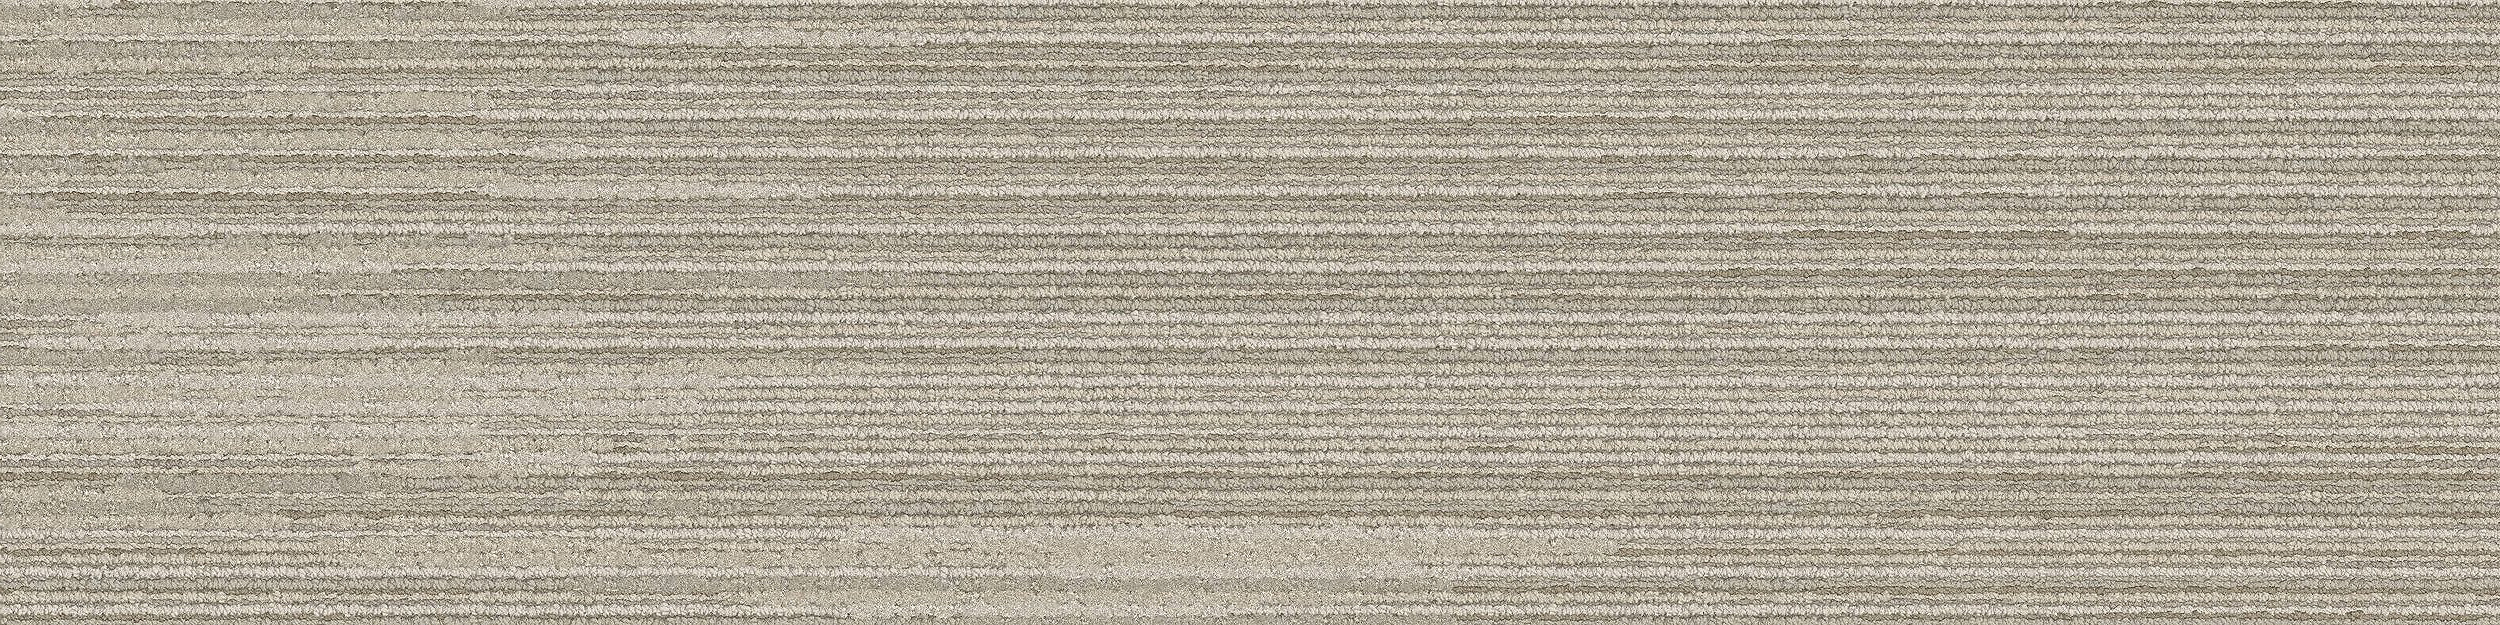 SWTS110 Carpet Tile In Vanilla image number 4